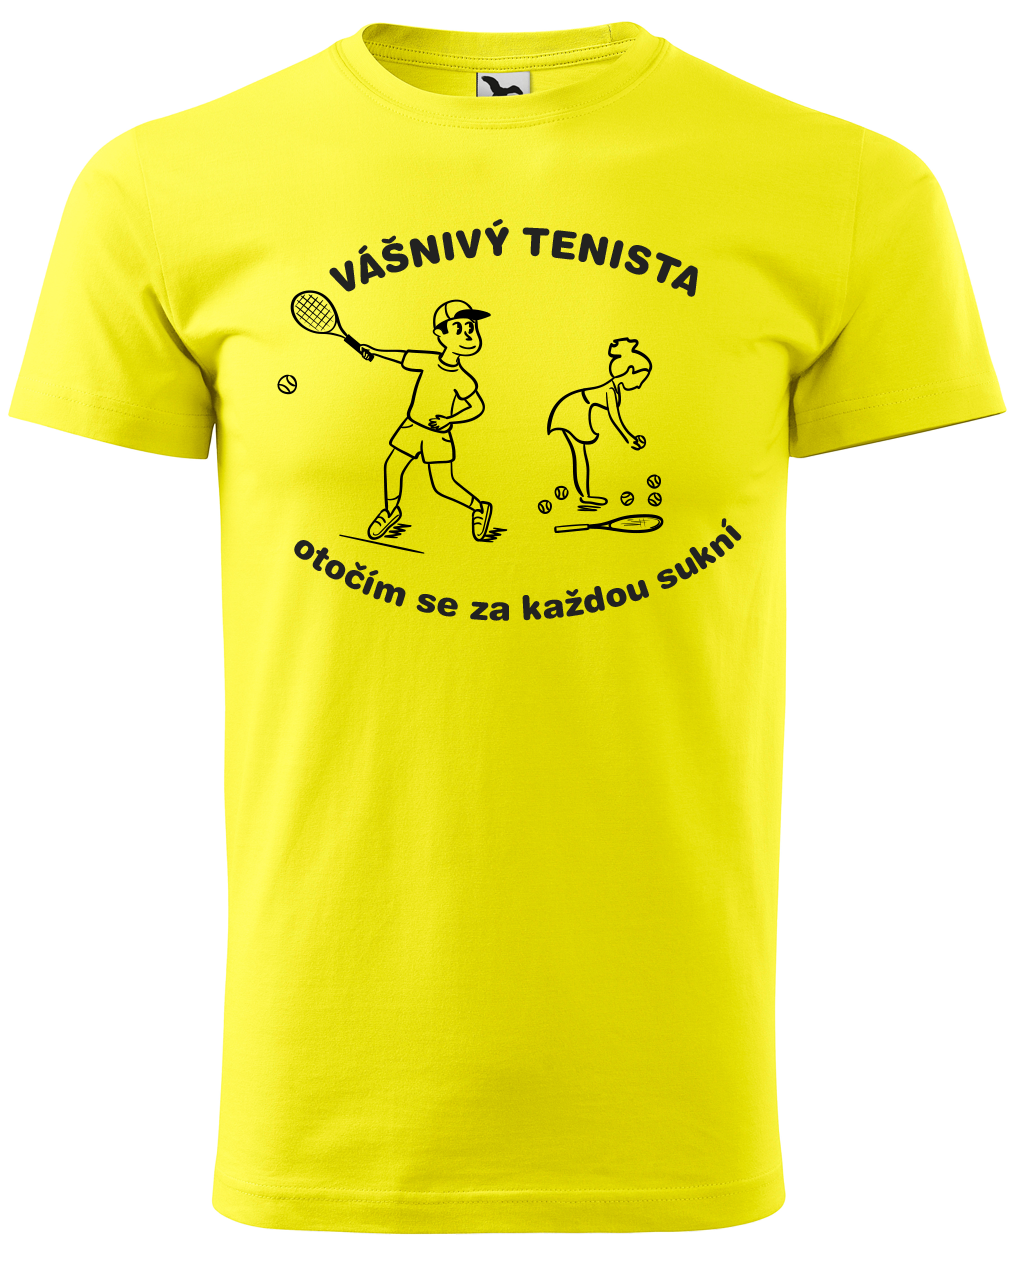 Vtipné tenisové tričko - Vášnivý tenista Velikost: L, Barva: Žlutá (04)